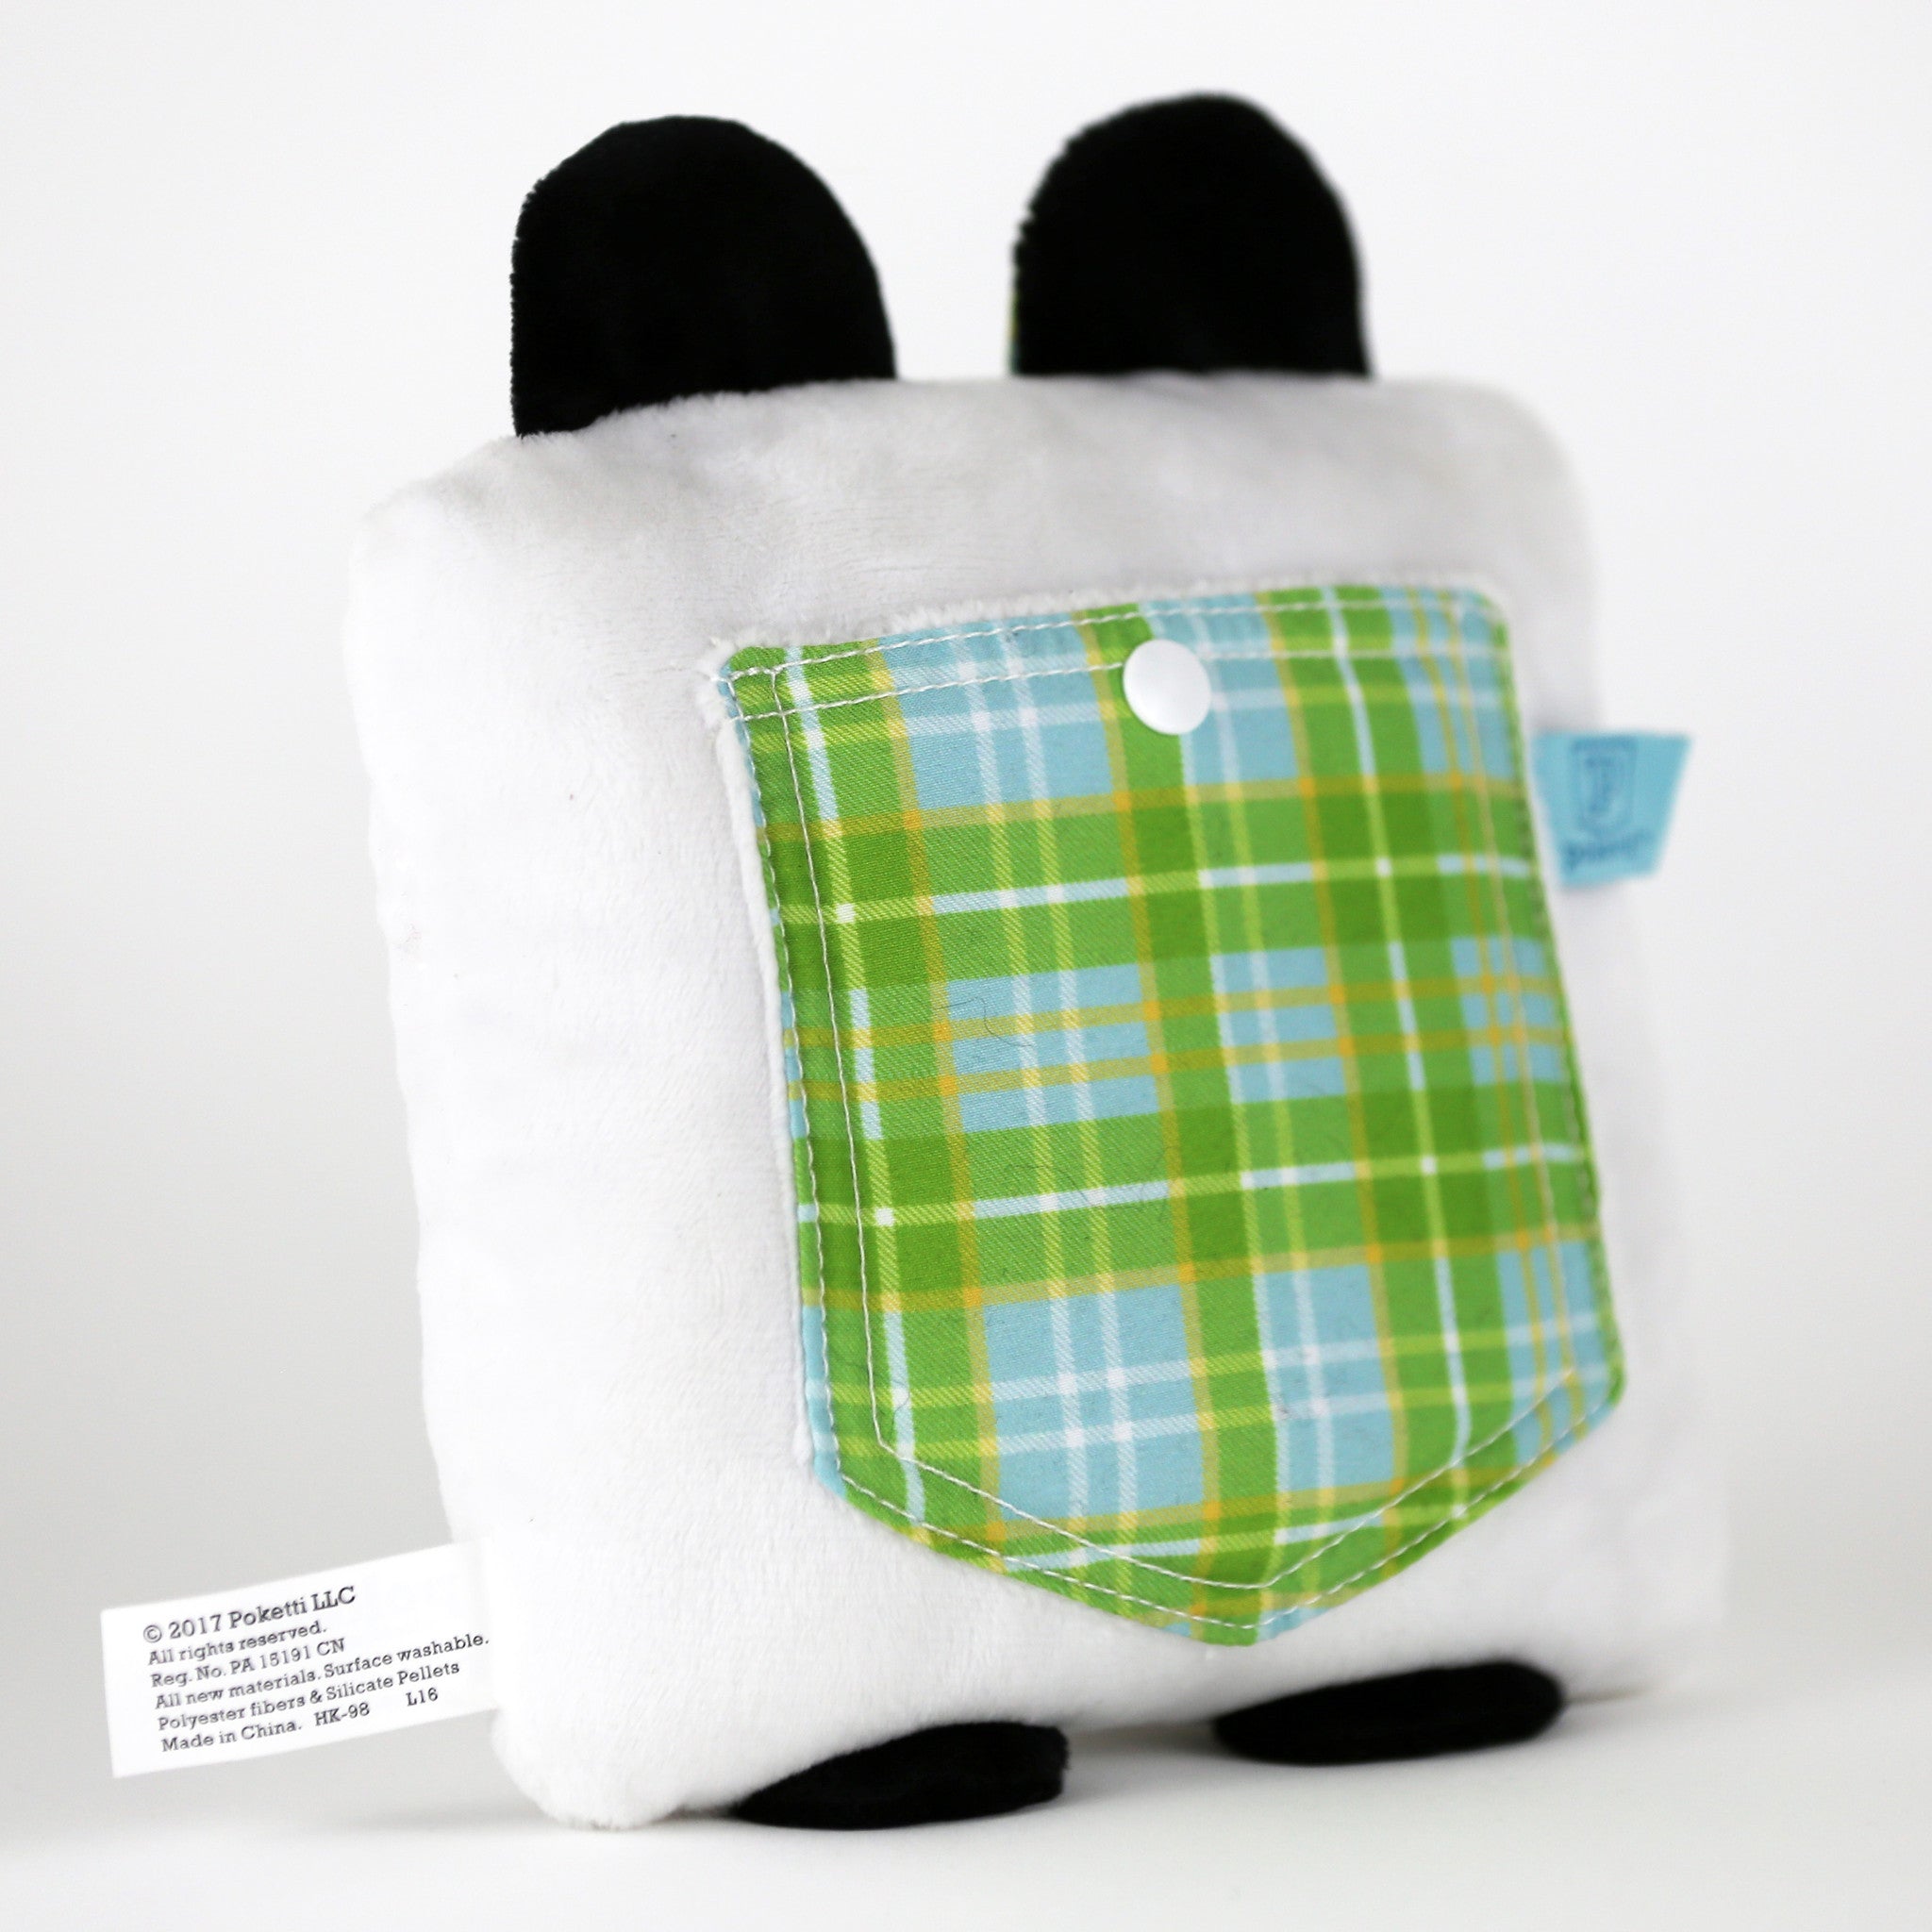 Plush toy panda bear stuffed animal bear with a useful back pocket